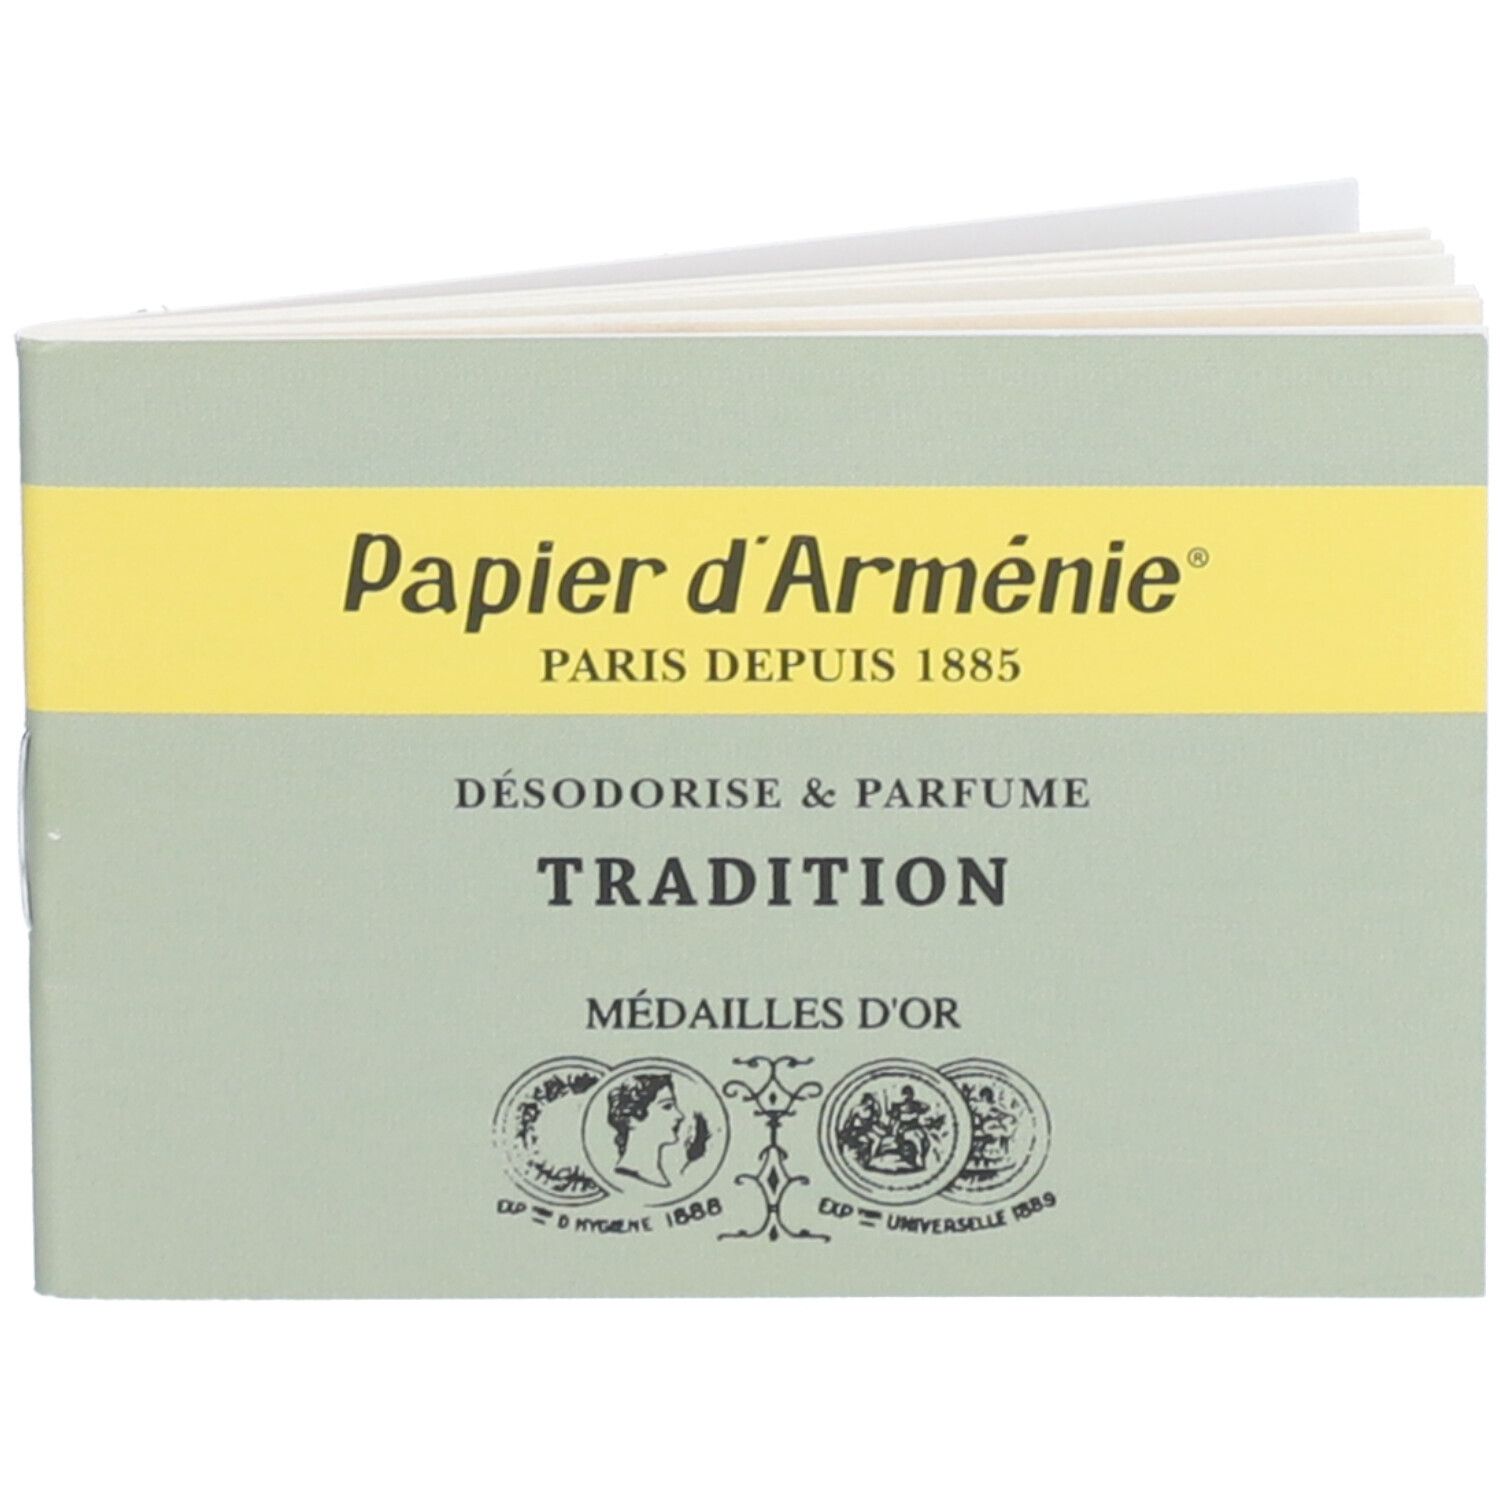 Image of Papier d'Arménie